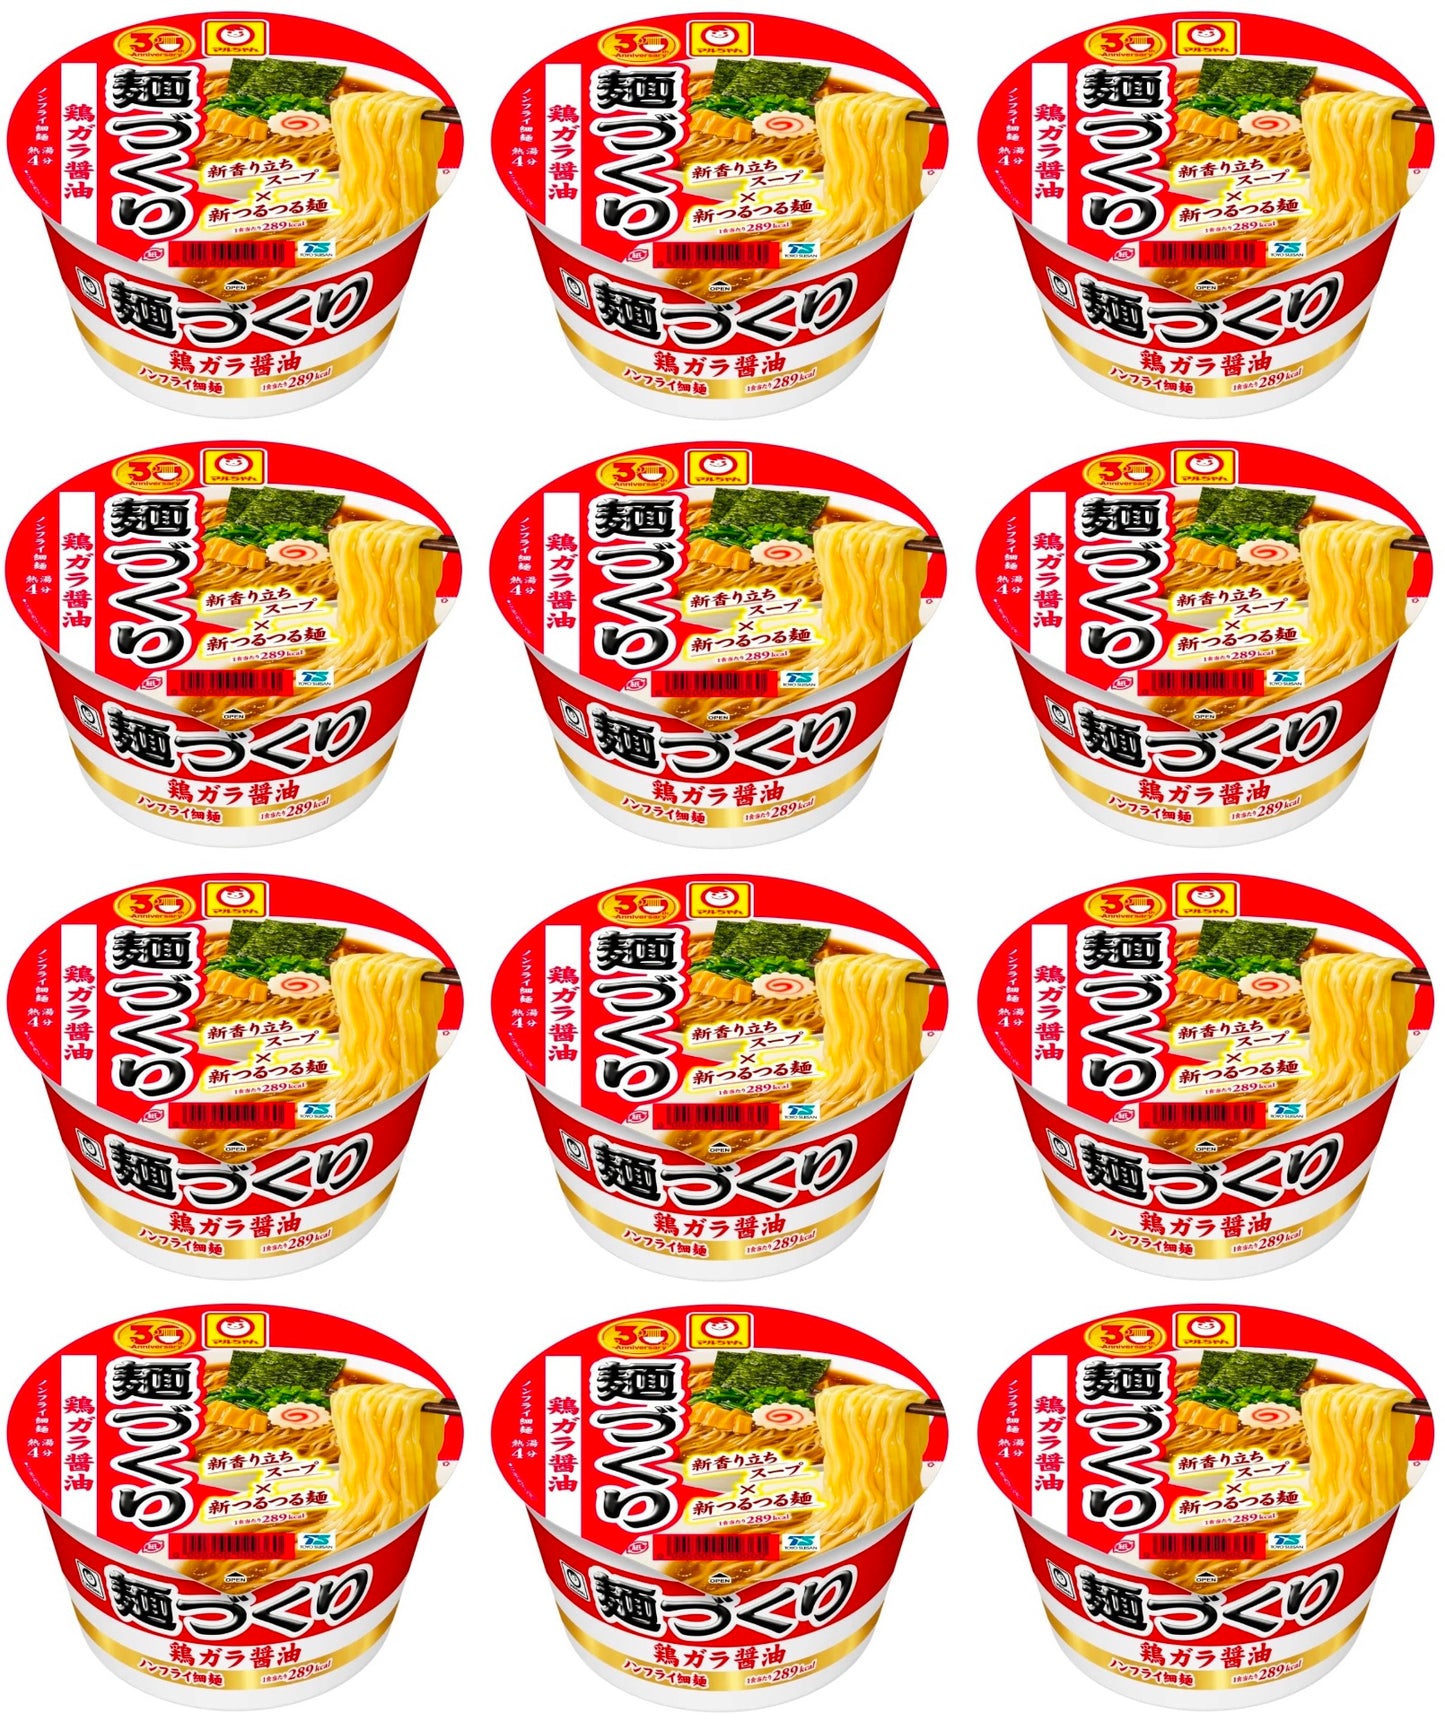 Maruchan Ramen Noodles MENDUKURI Soy Sauce Cup Soup Instant Food Japanese 97g